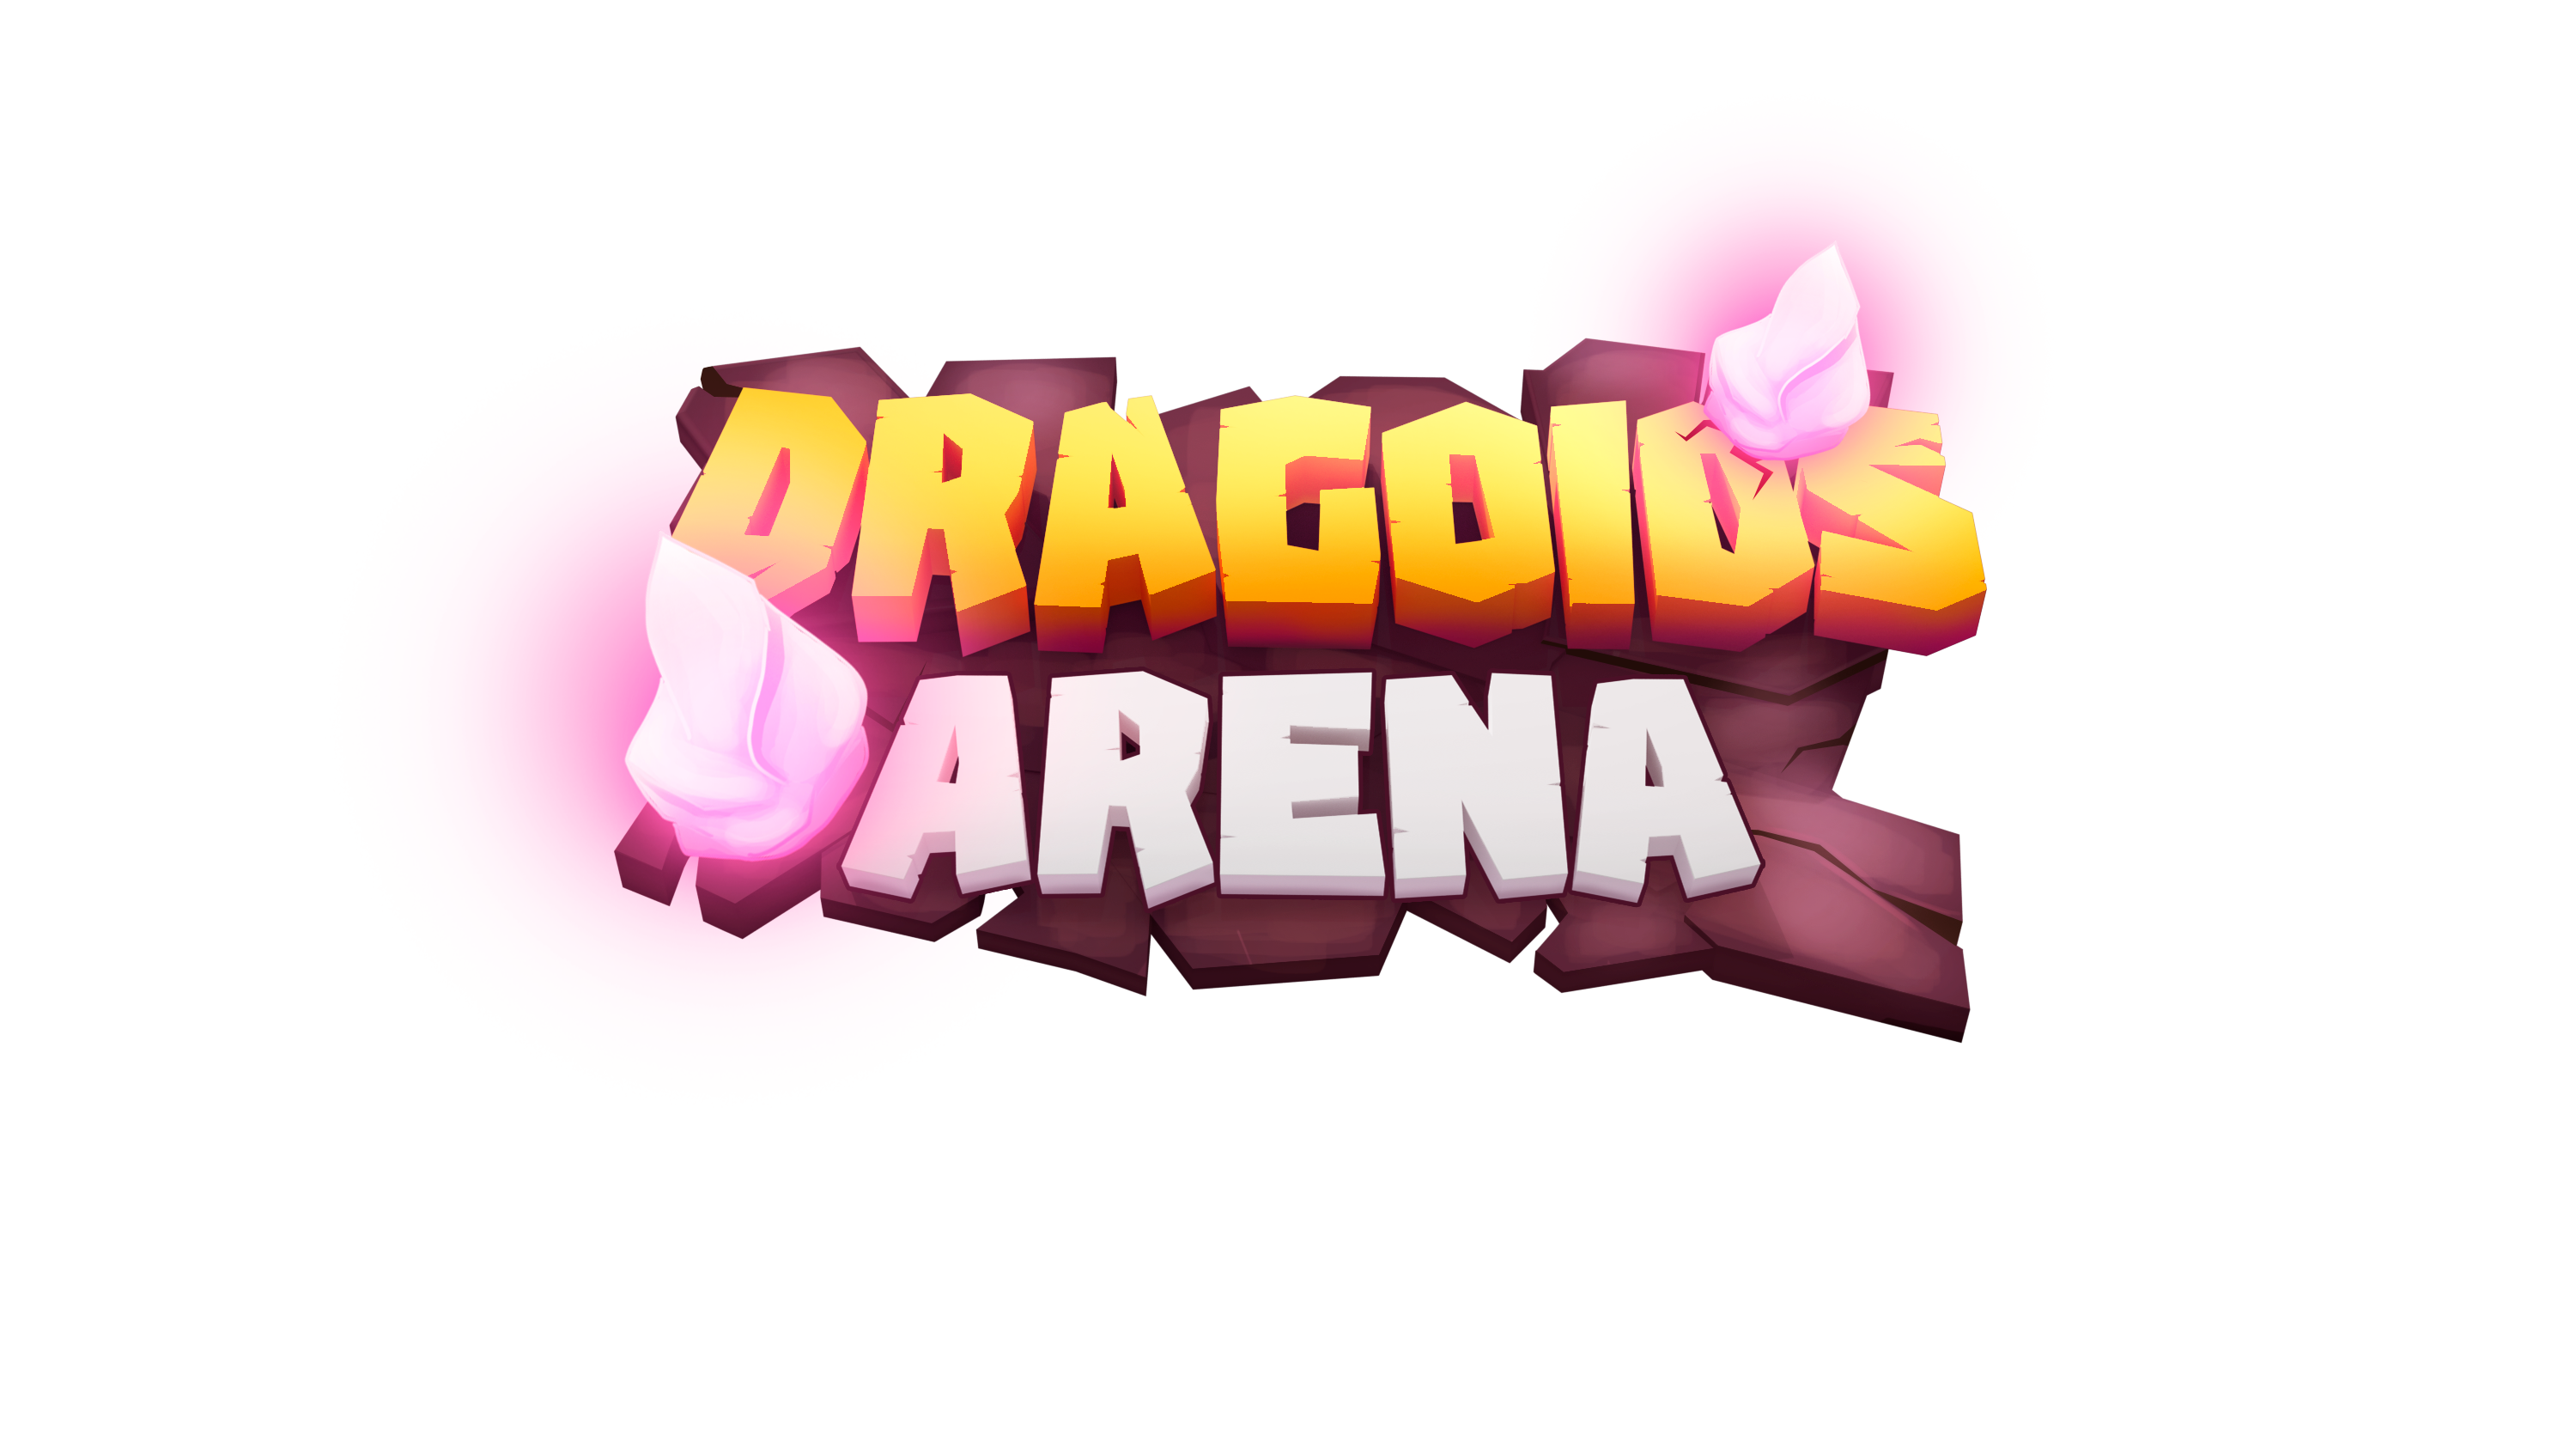 Dragoids Arena